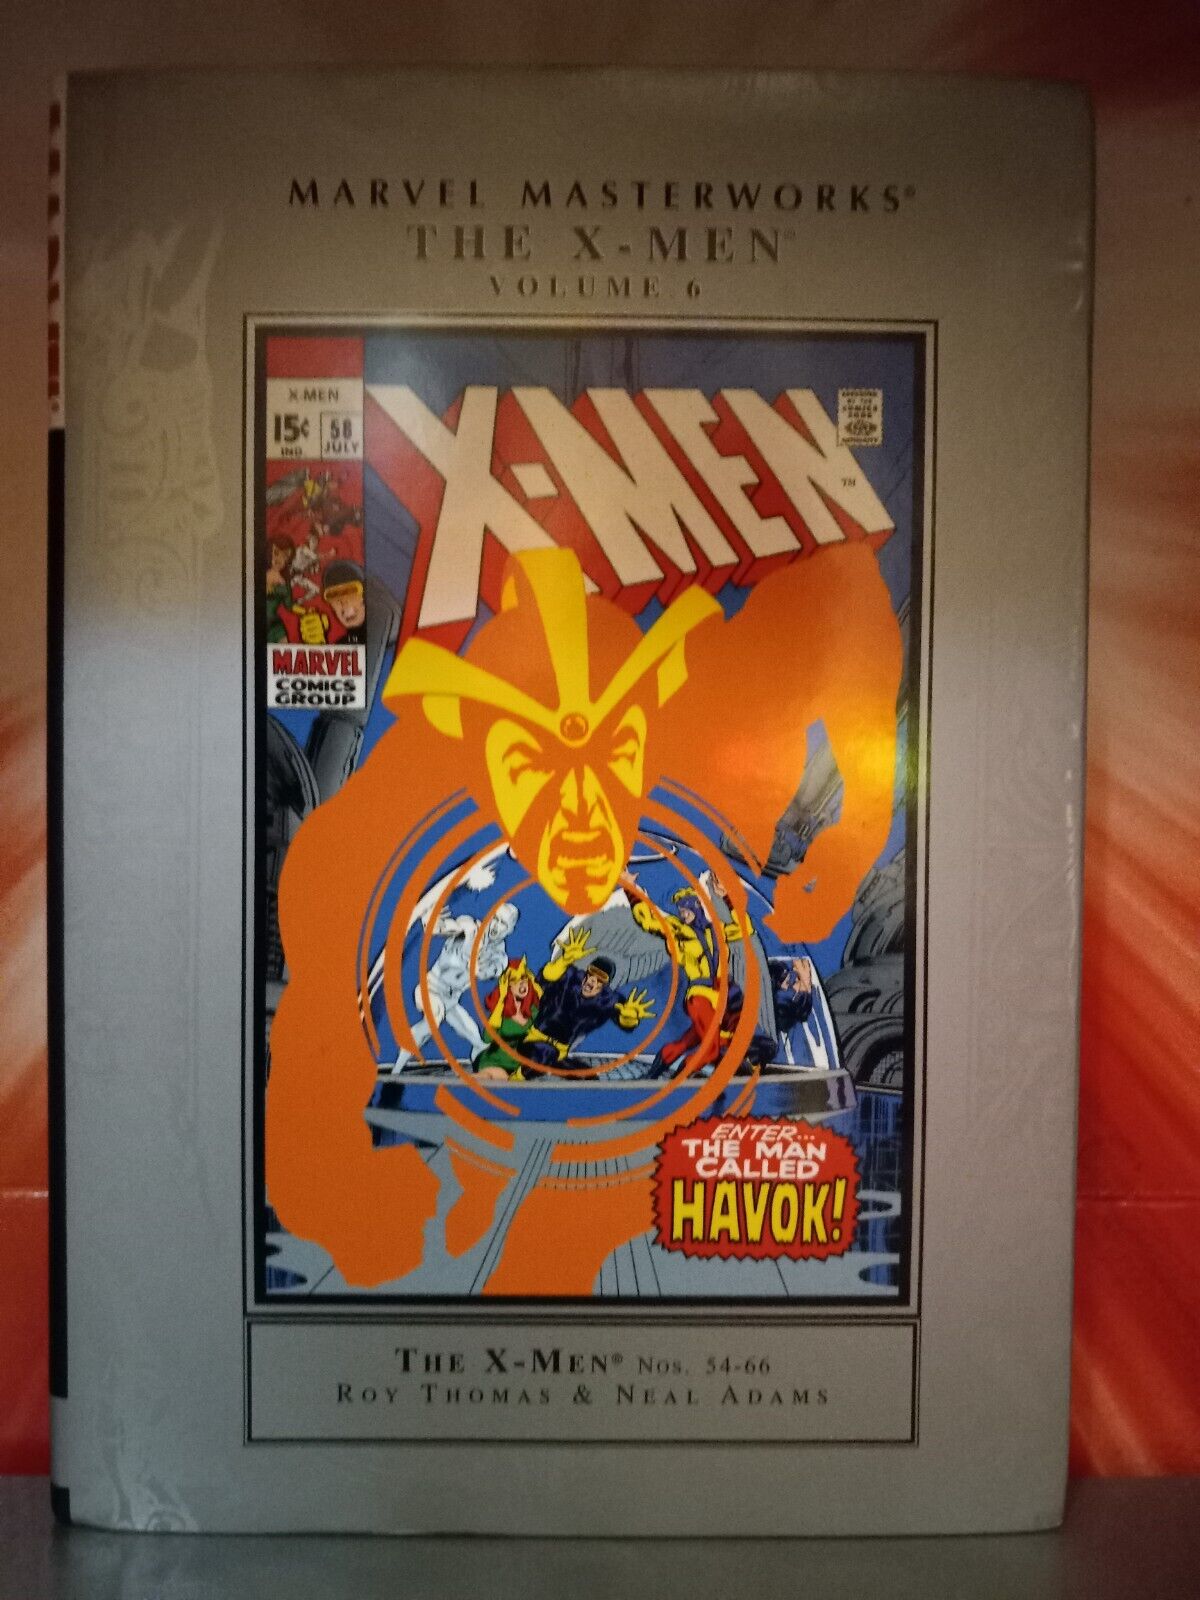 MARVEL MASTERWORKS: THE X-MEN - VOLUME 6 - HARDCOVER - Roy Thomas & Neal Adams